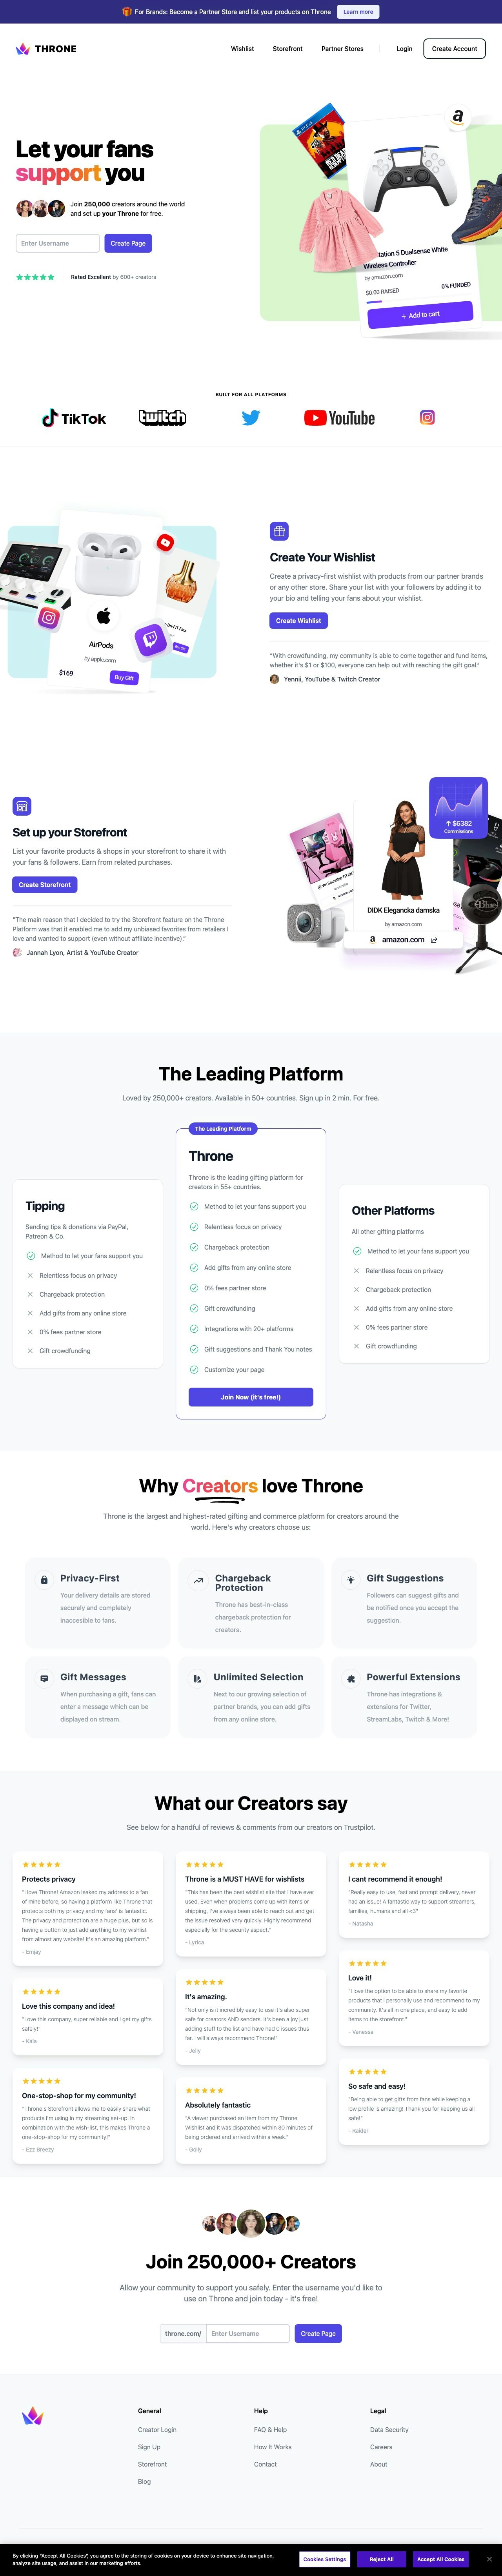 Throne landing page design